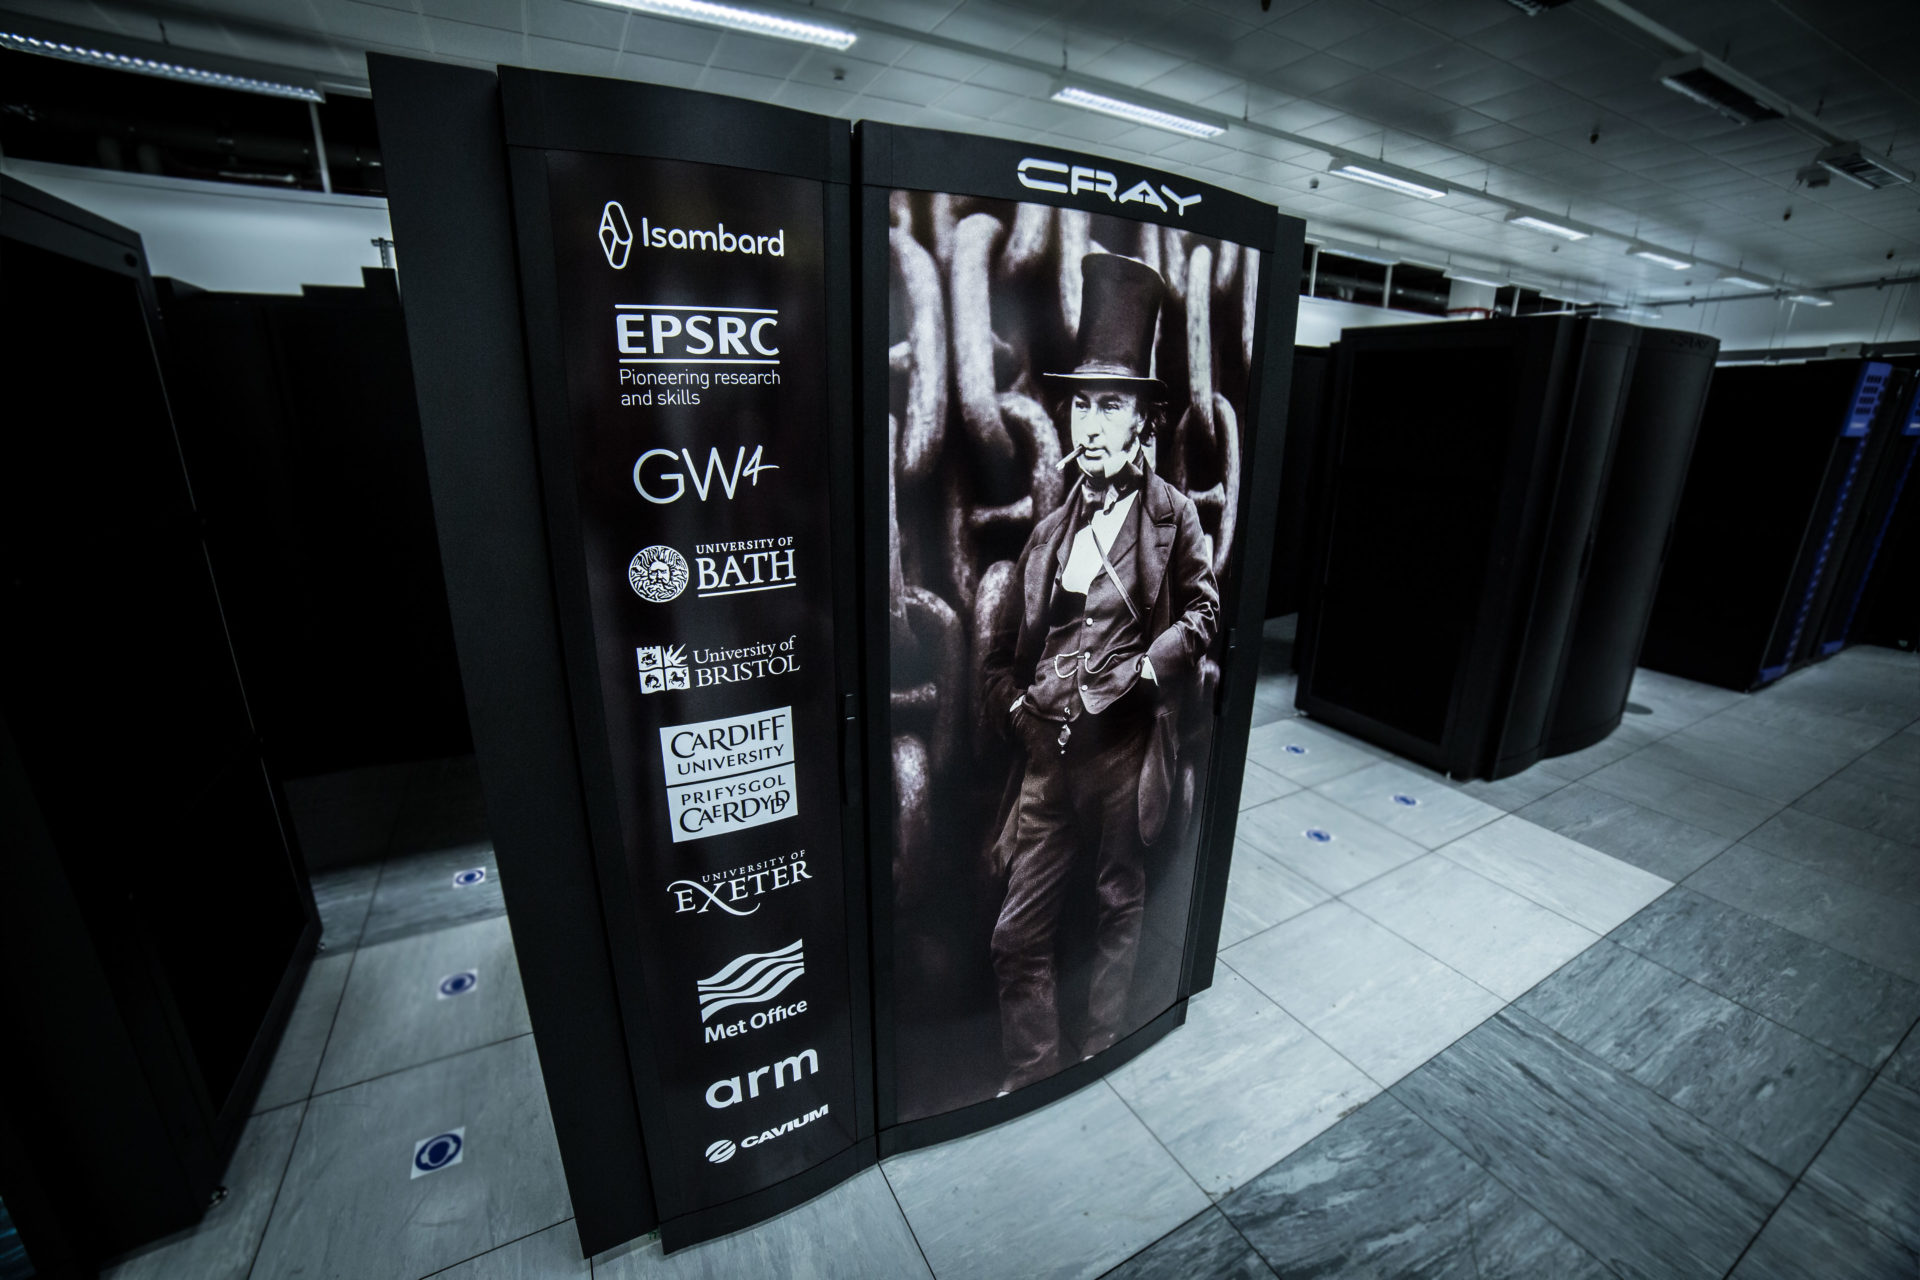 GW4 supercomputer Isambard proves competitive